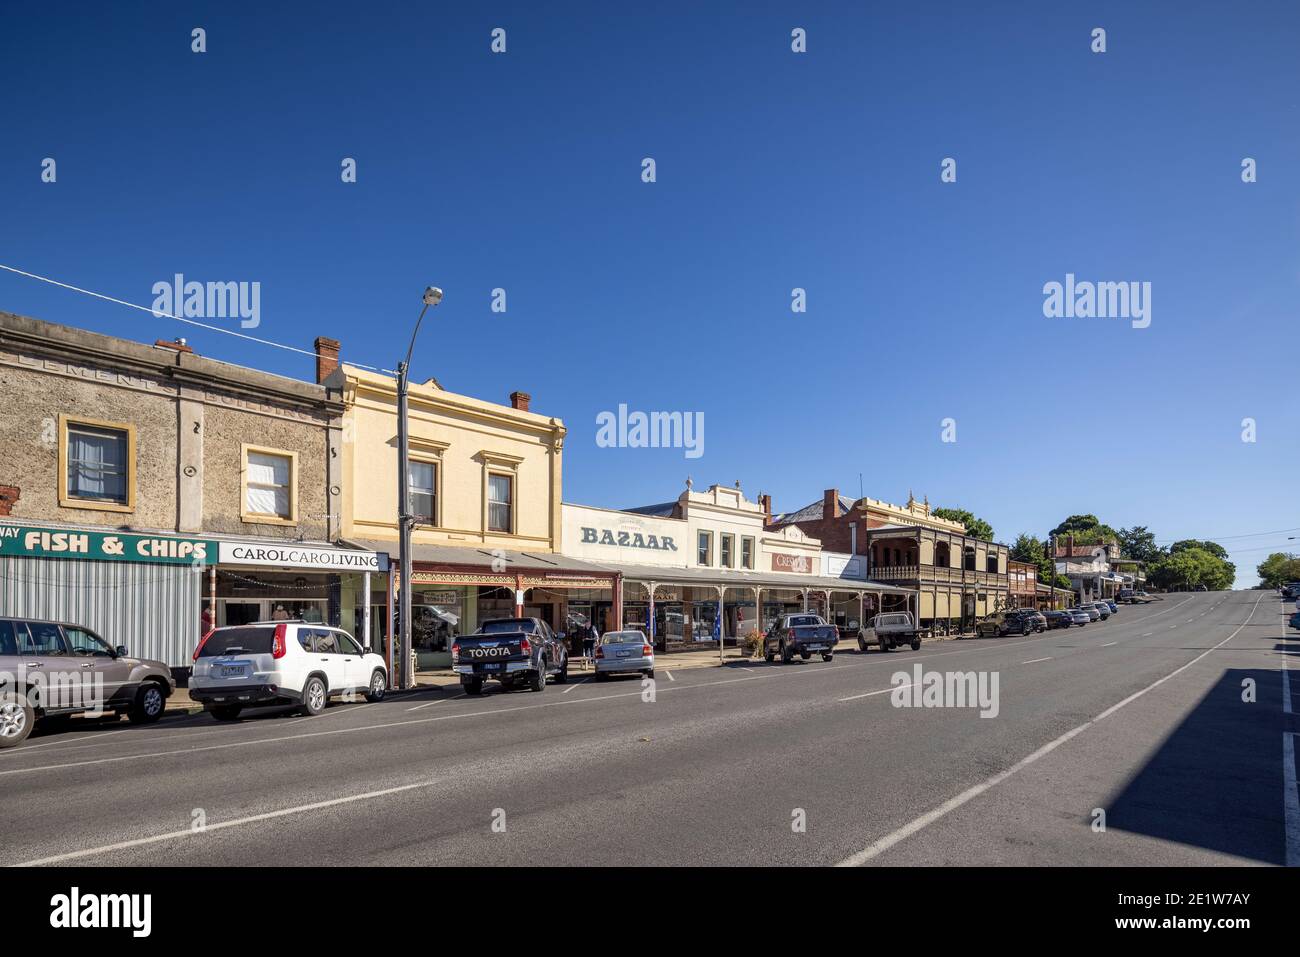 Looking up the main street in Beechworth, Victoria, Australia. Stock Photo